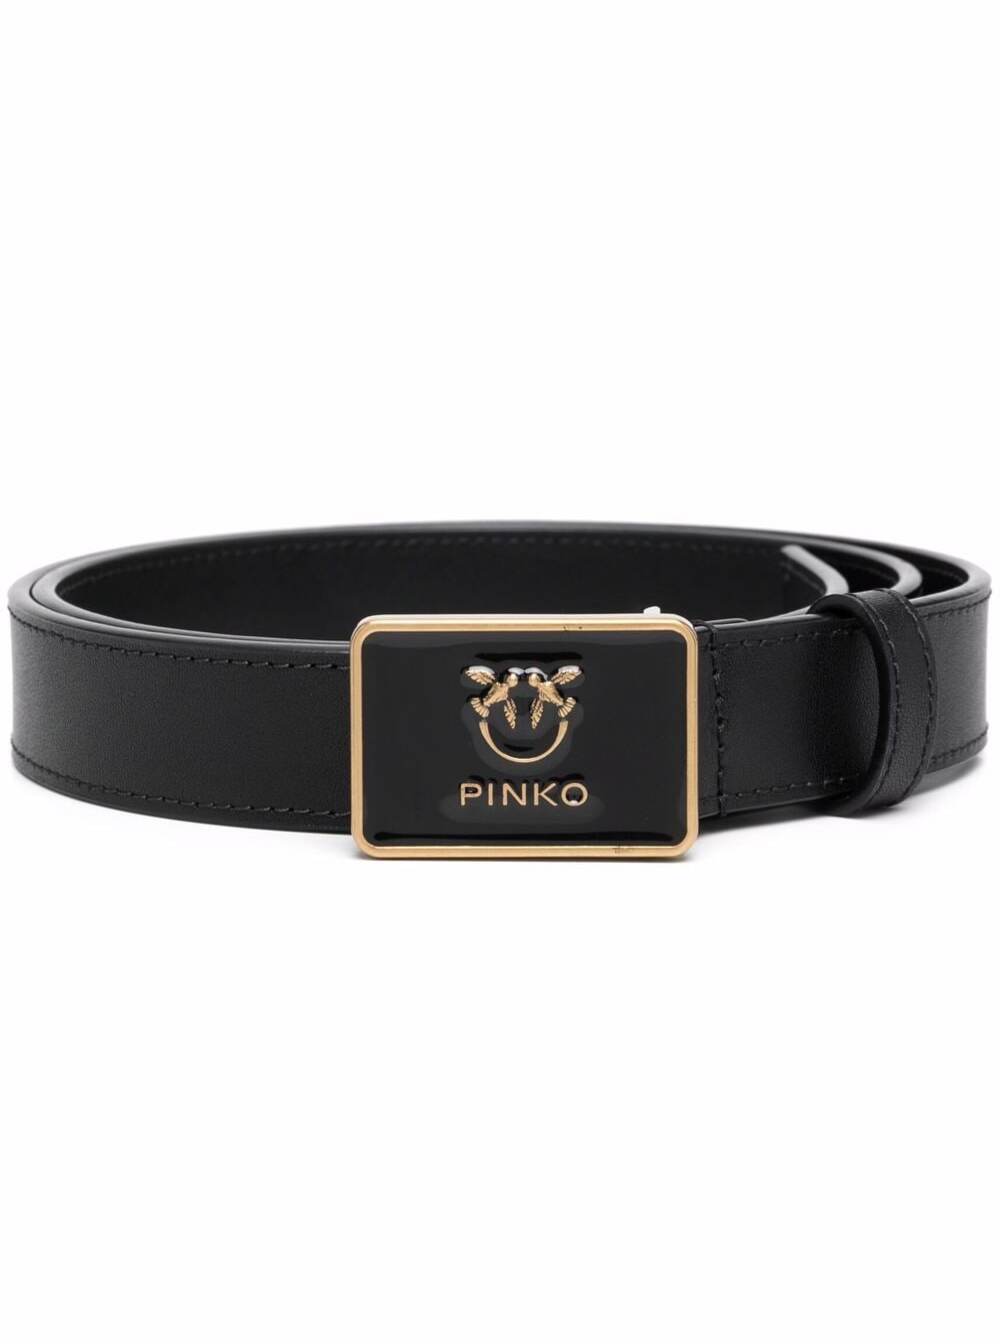 Pinko Black Leather Belt With Logo Buckle